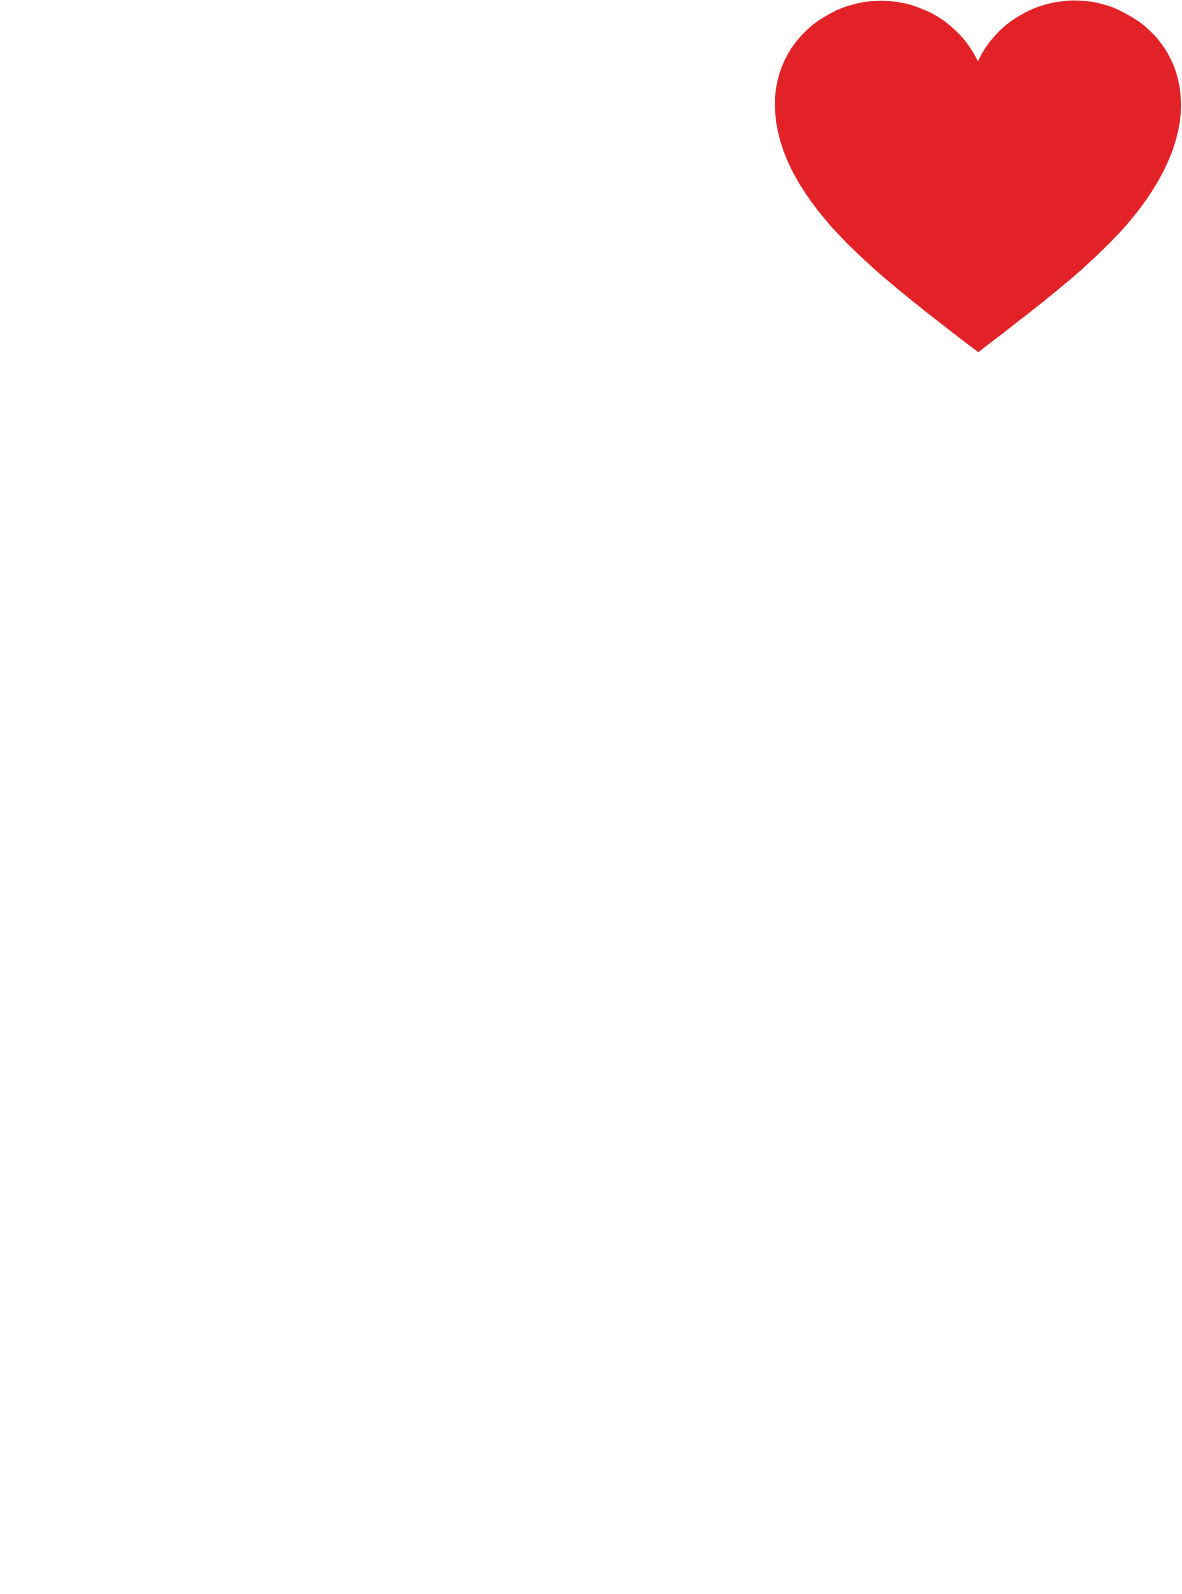 General Mills logo pour fonds sombres (PNG transparent)